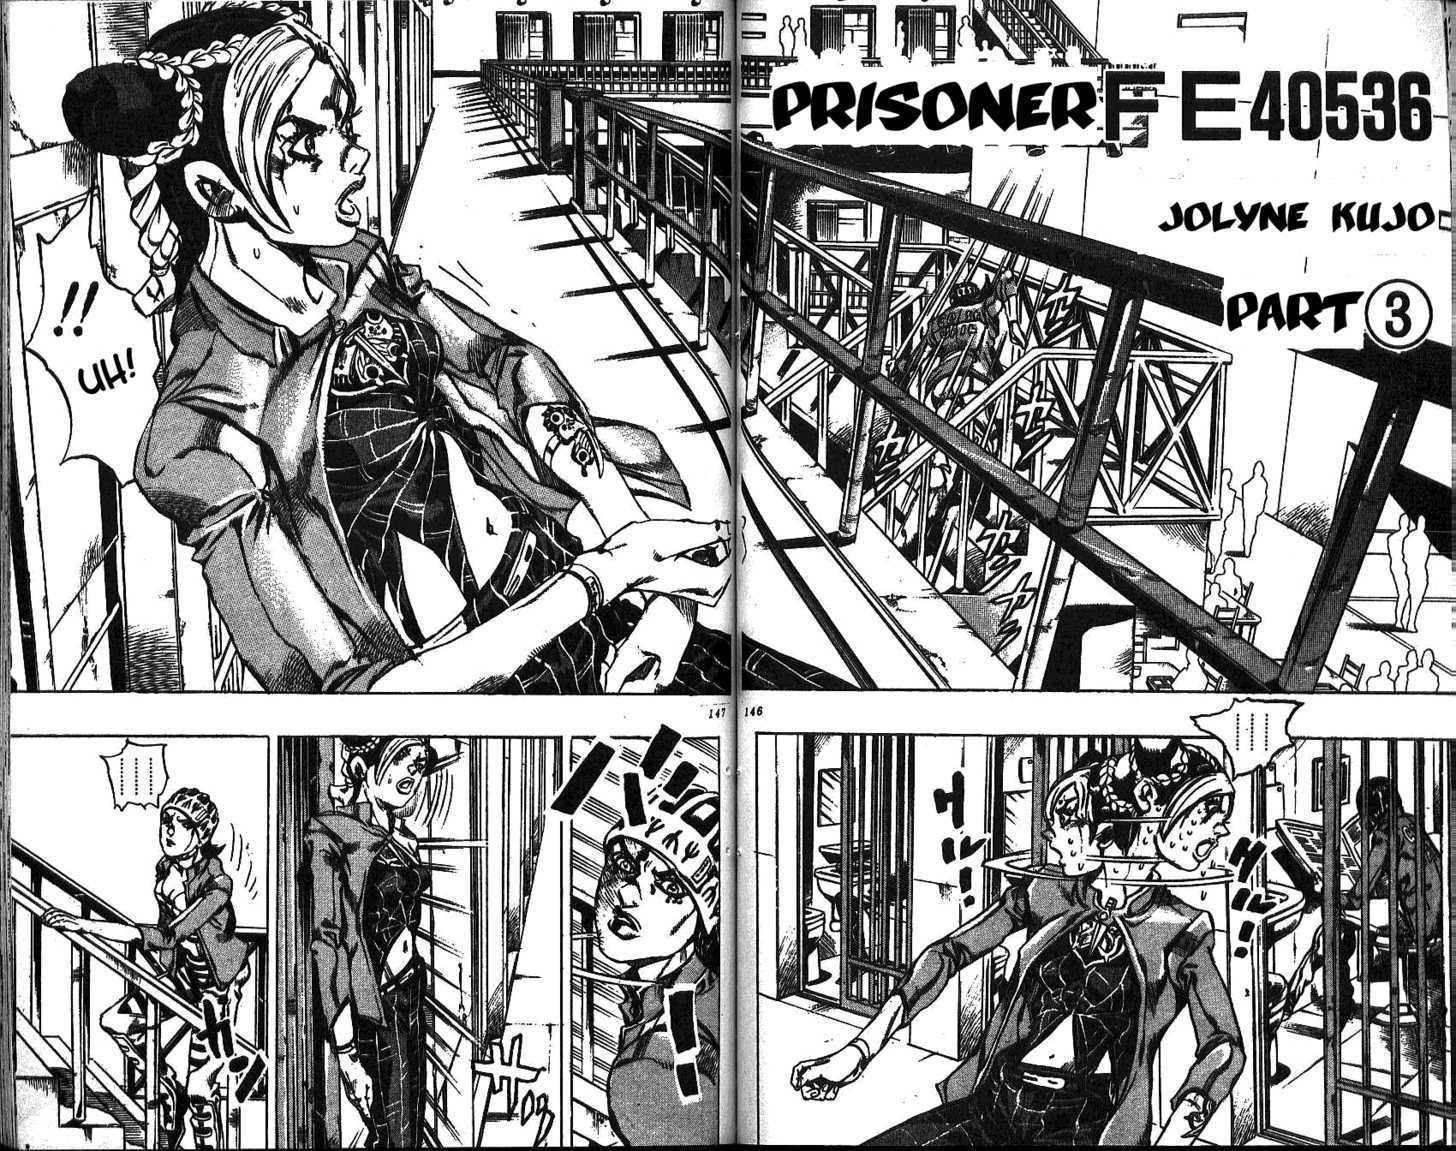 Jojo's Bizarre Adventure Vol.64 Chapter 600 : Prisoner Fe40563: Jolyne Kujo (3) page 2 - 